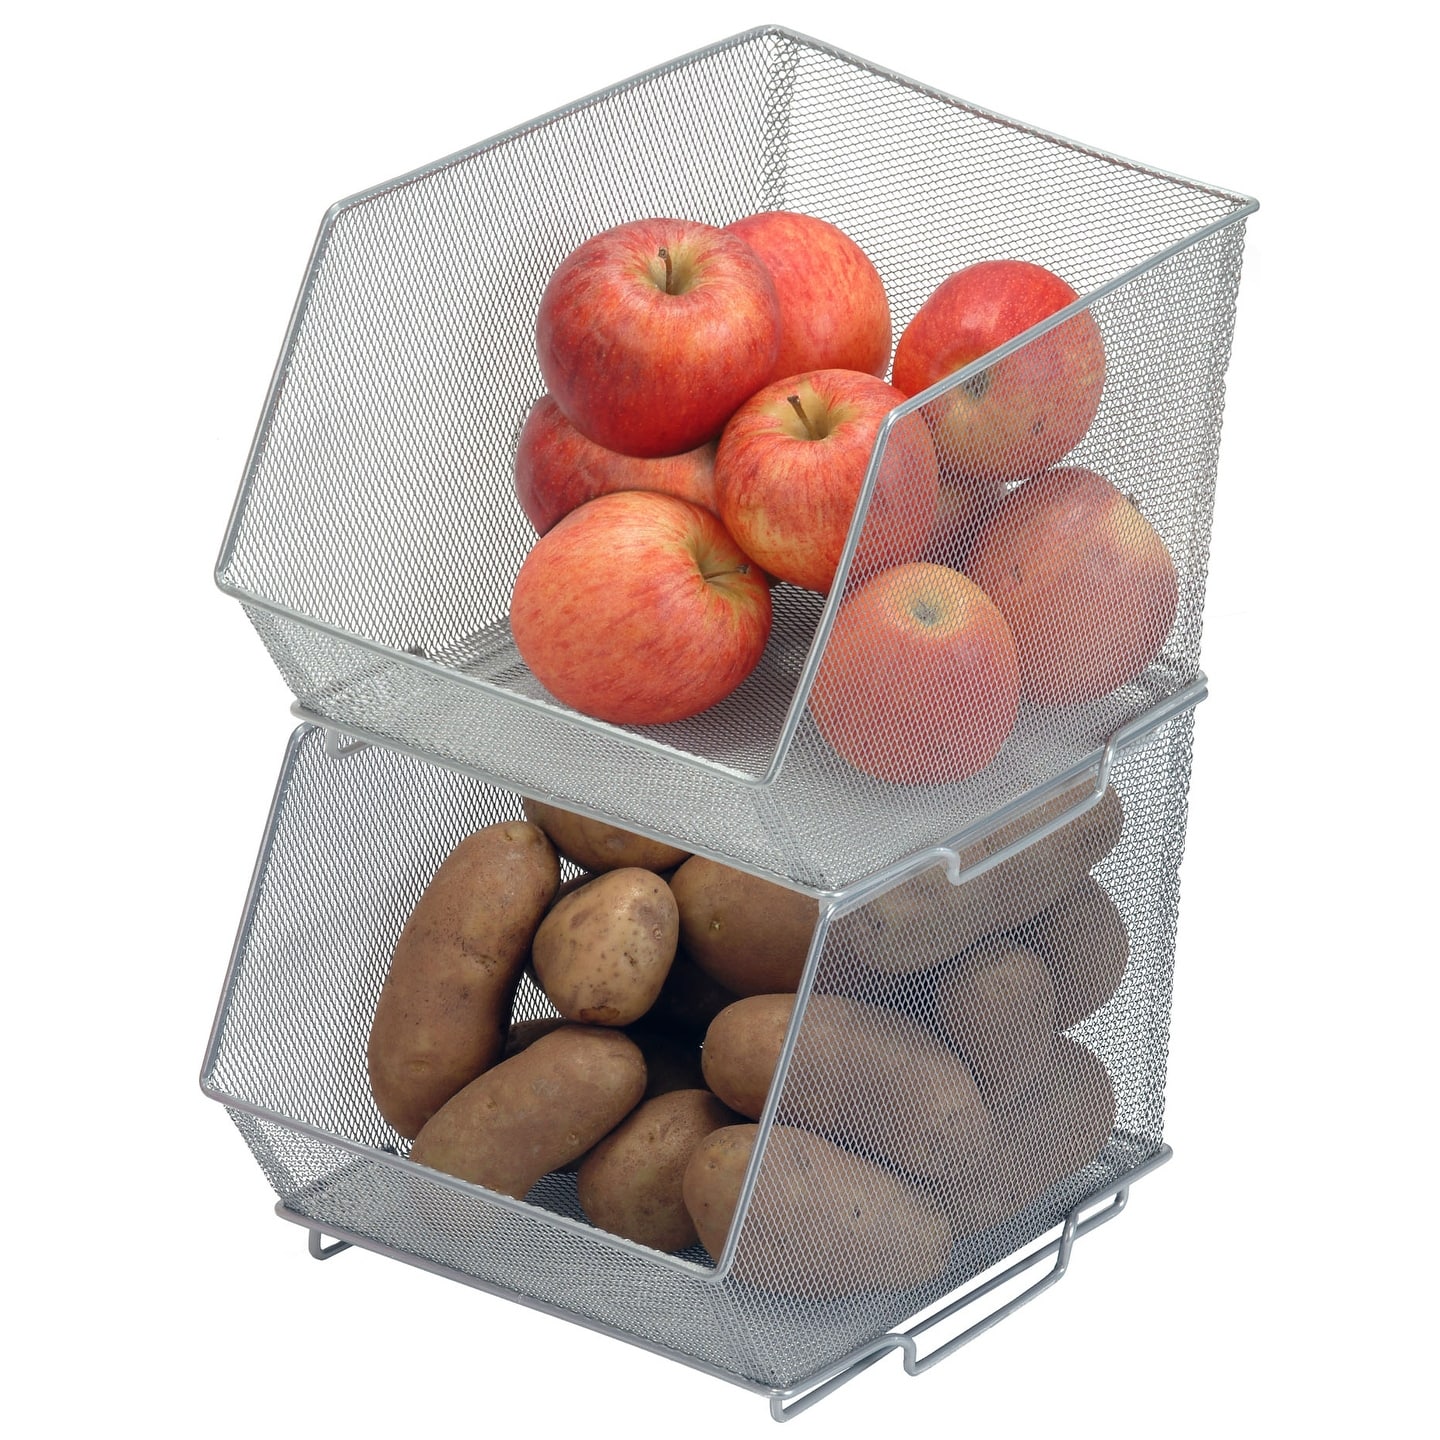 Silver Mesh Open Bin Storage Basket Organizer for Fruits, Pantry items toys  199